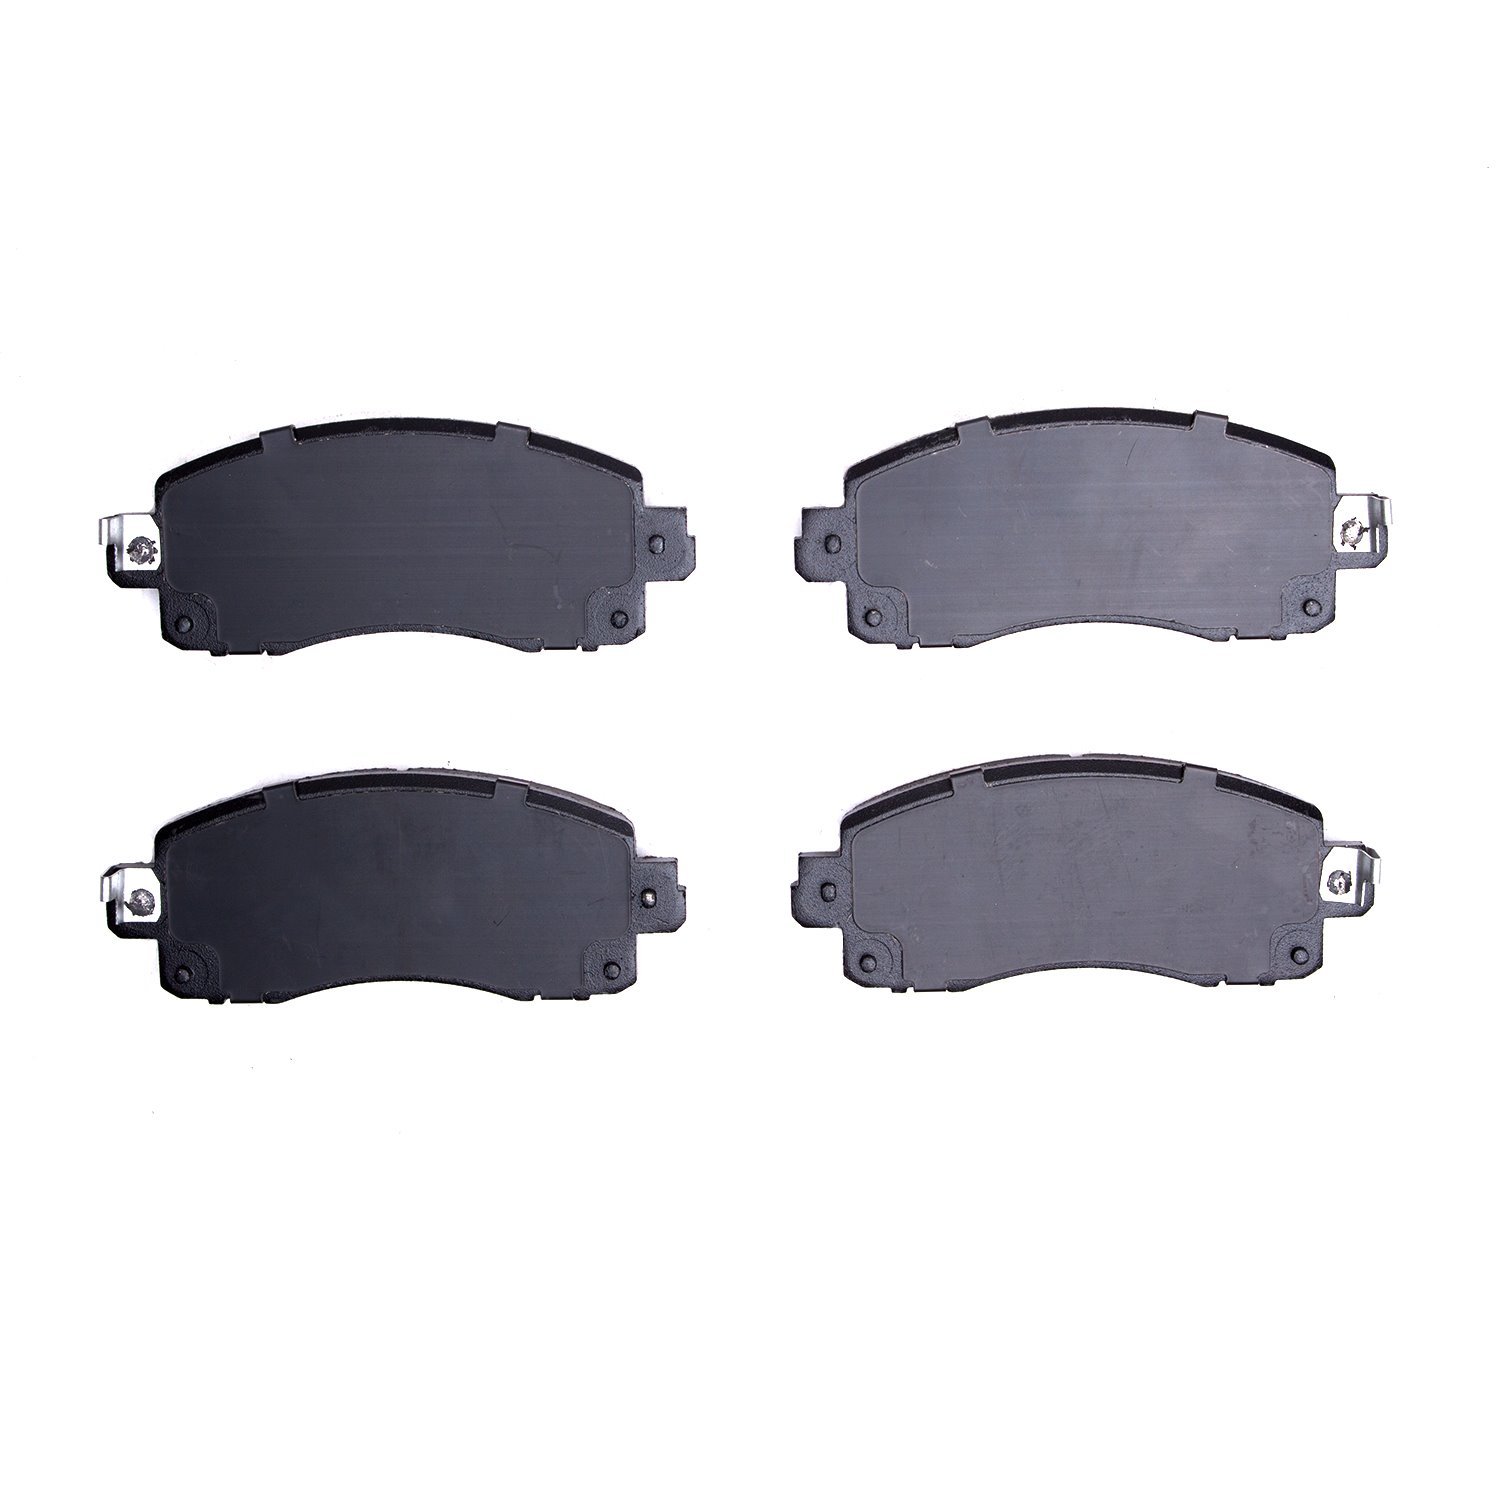 1551-2045-00 5000 Advanced Ceramic Brake Pads, Fits Select Subaru, Position: Front